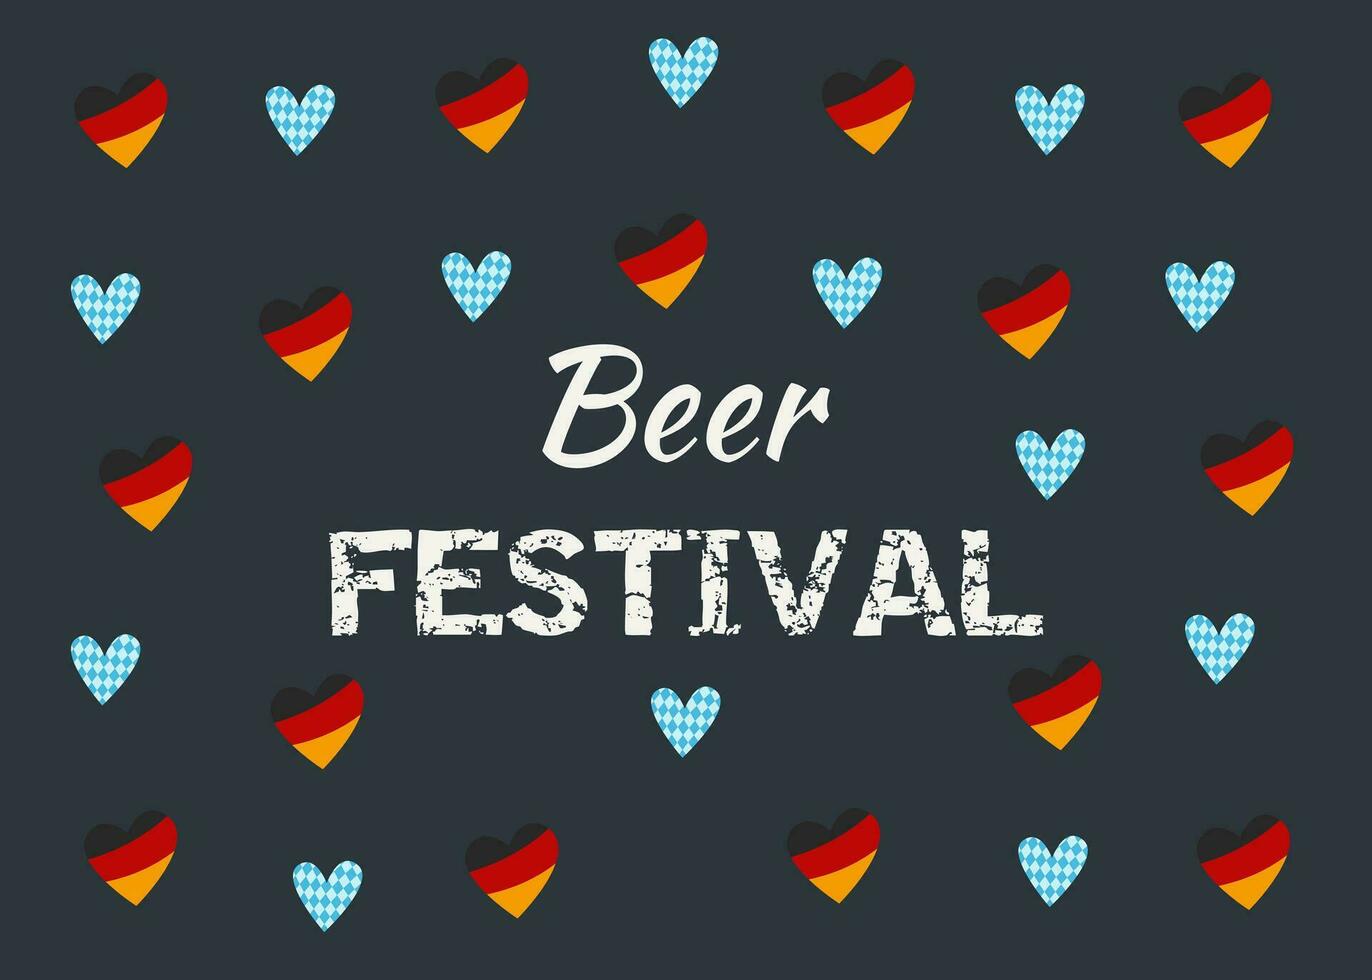 oktoberfeest. bier festival in duitsland. vector